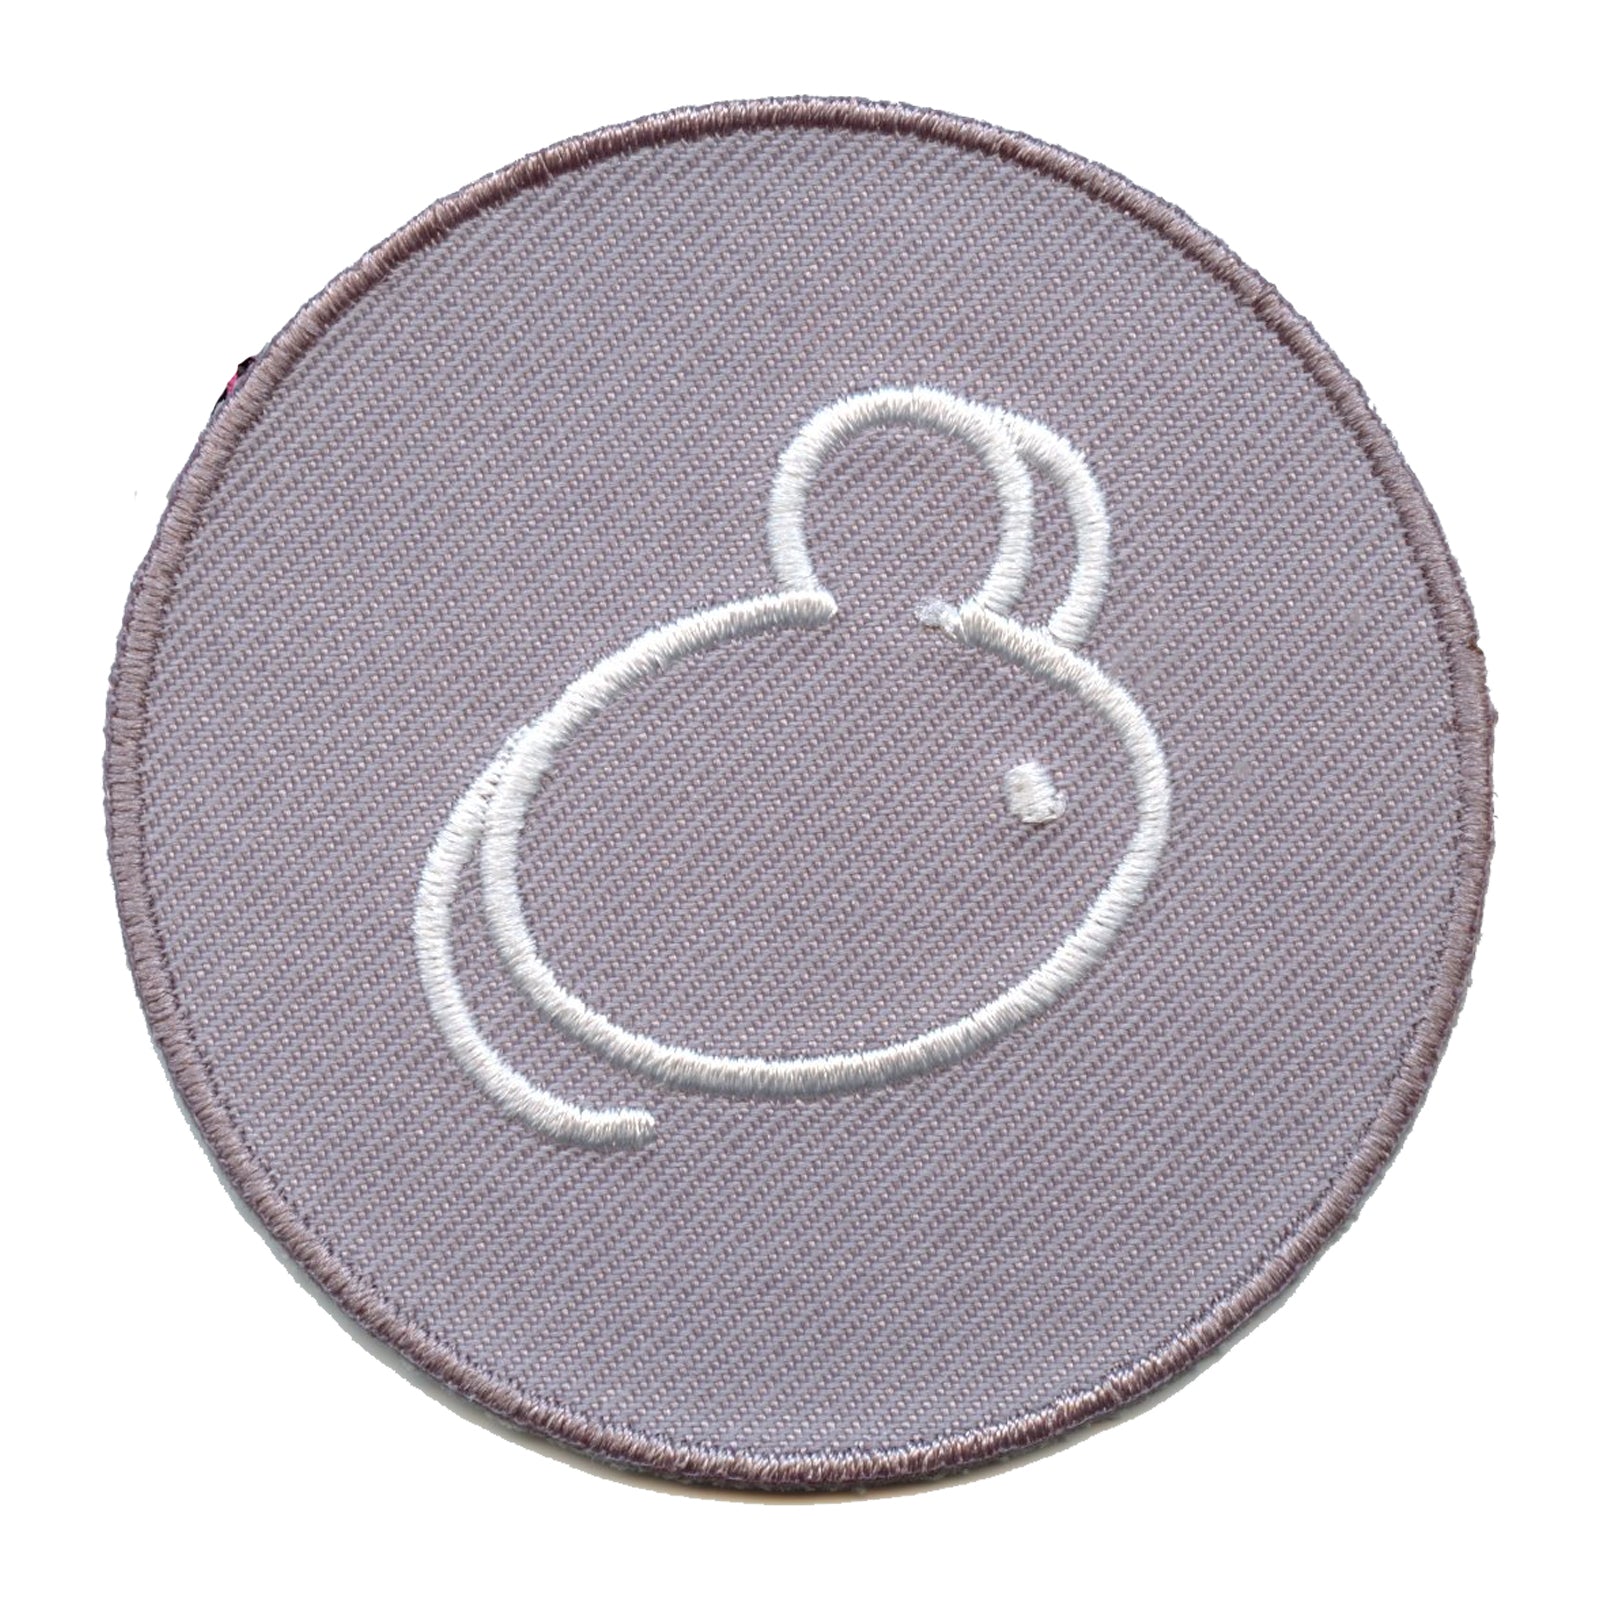 Fruits Basket: Rat Symbol Embroidered Patch 